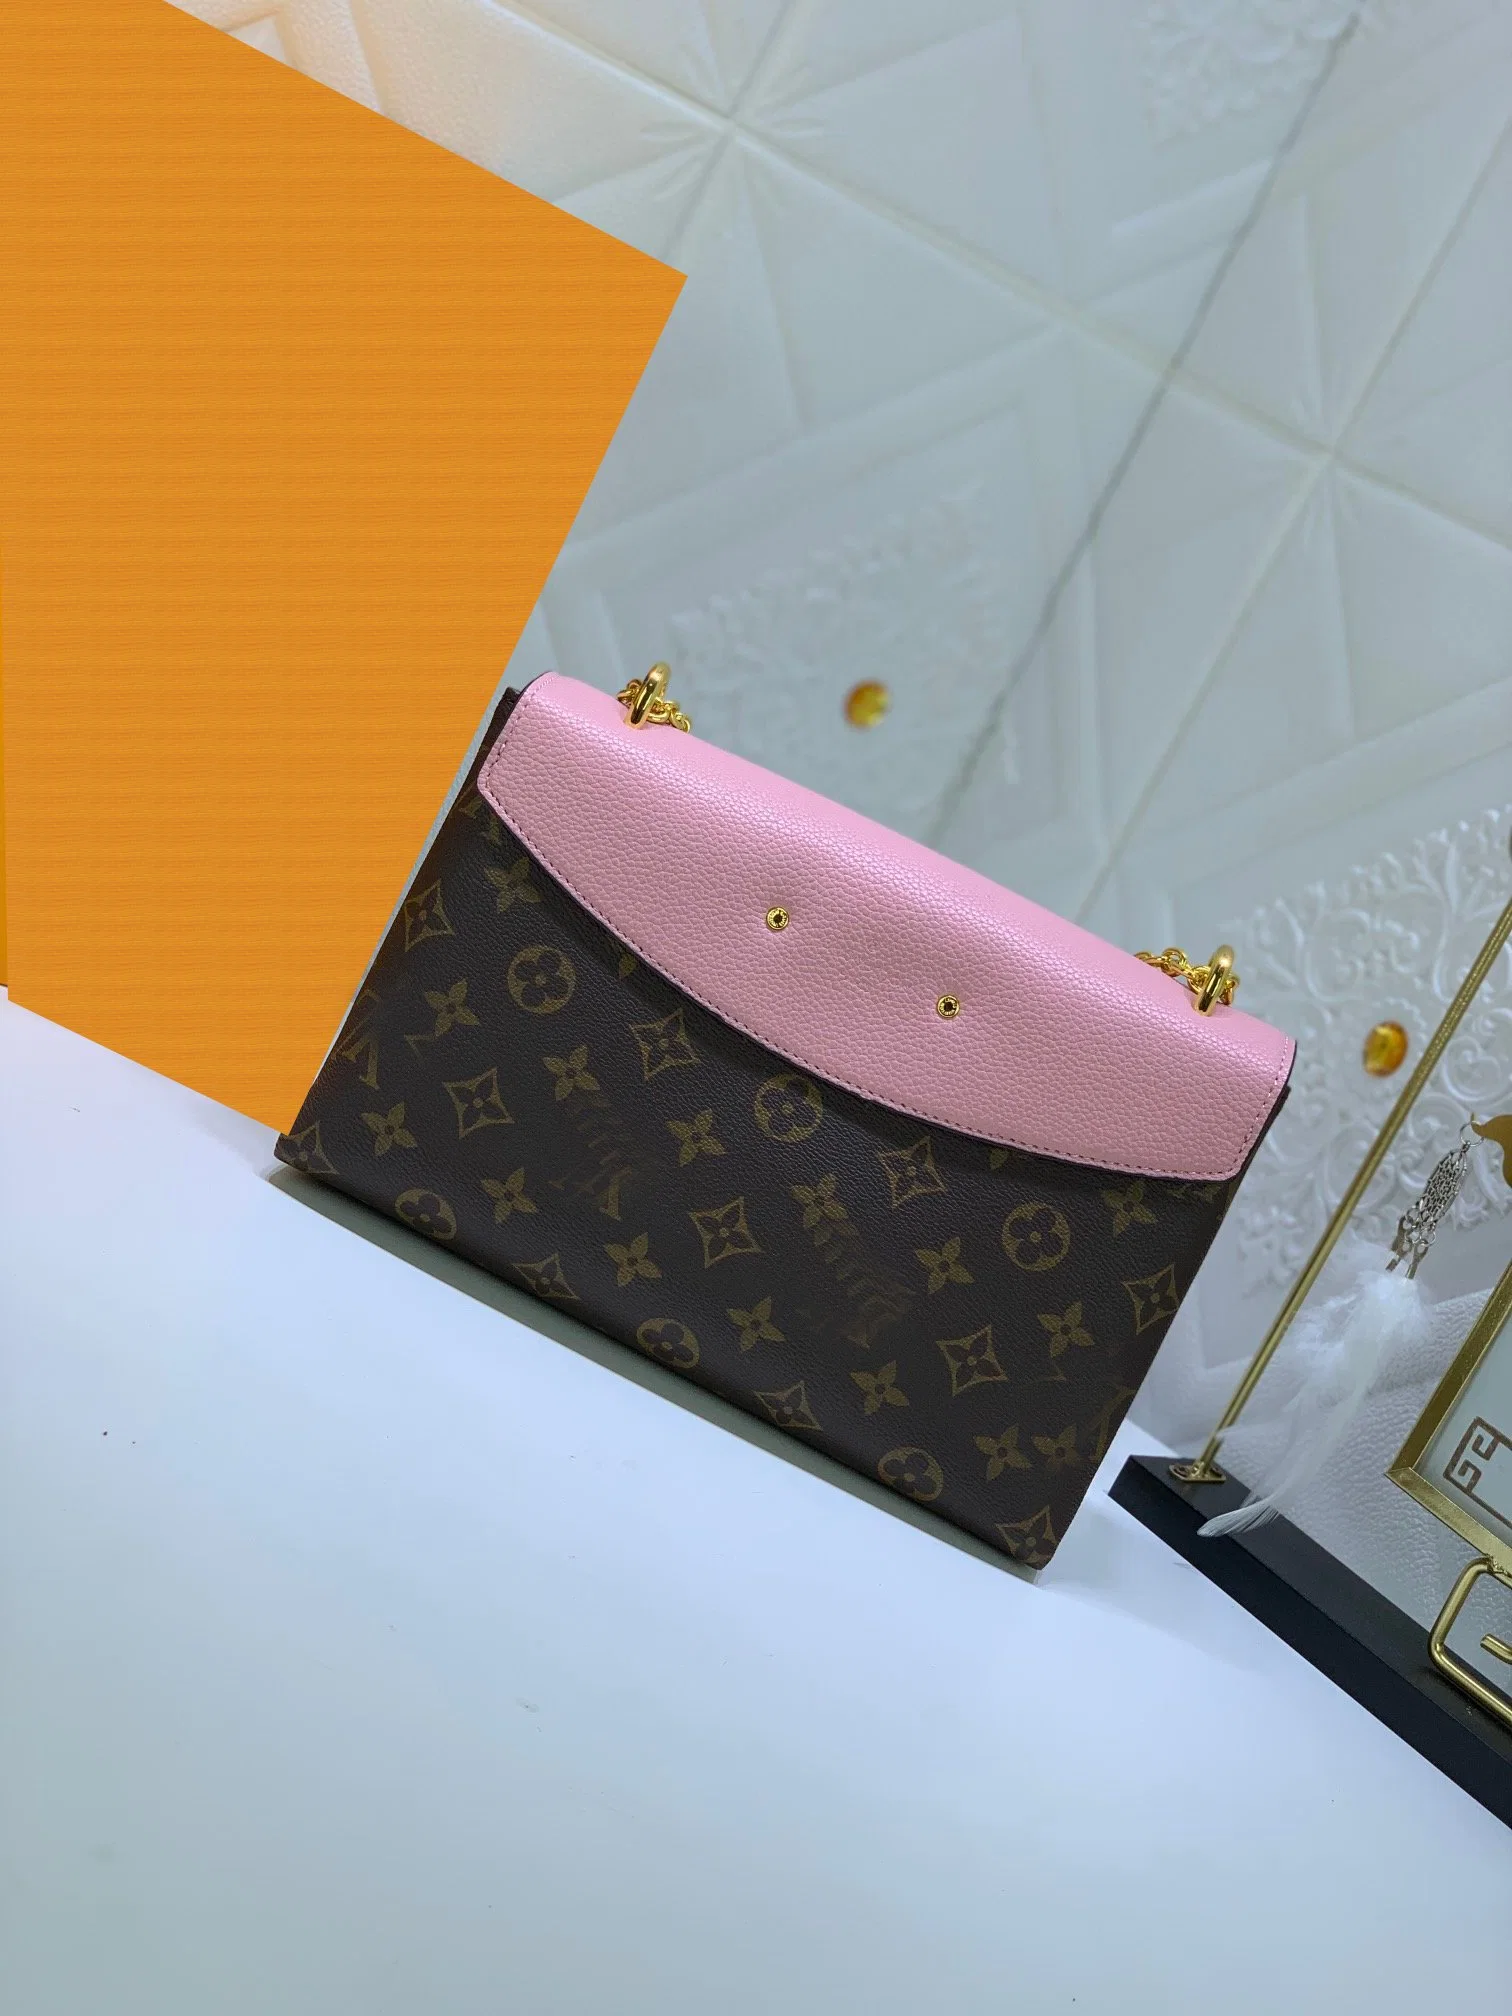 Fashion Saint Placide Bag Lady Shoulder Bag Luxury AAA Ladies Handbag Designer Crossbody Bags Evening Bags